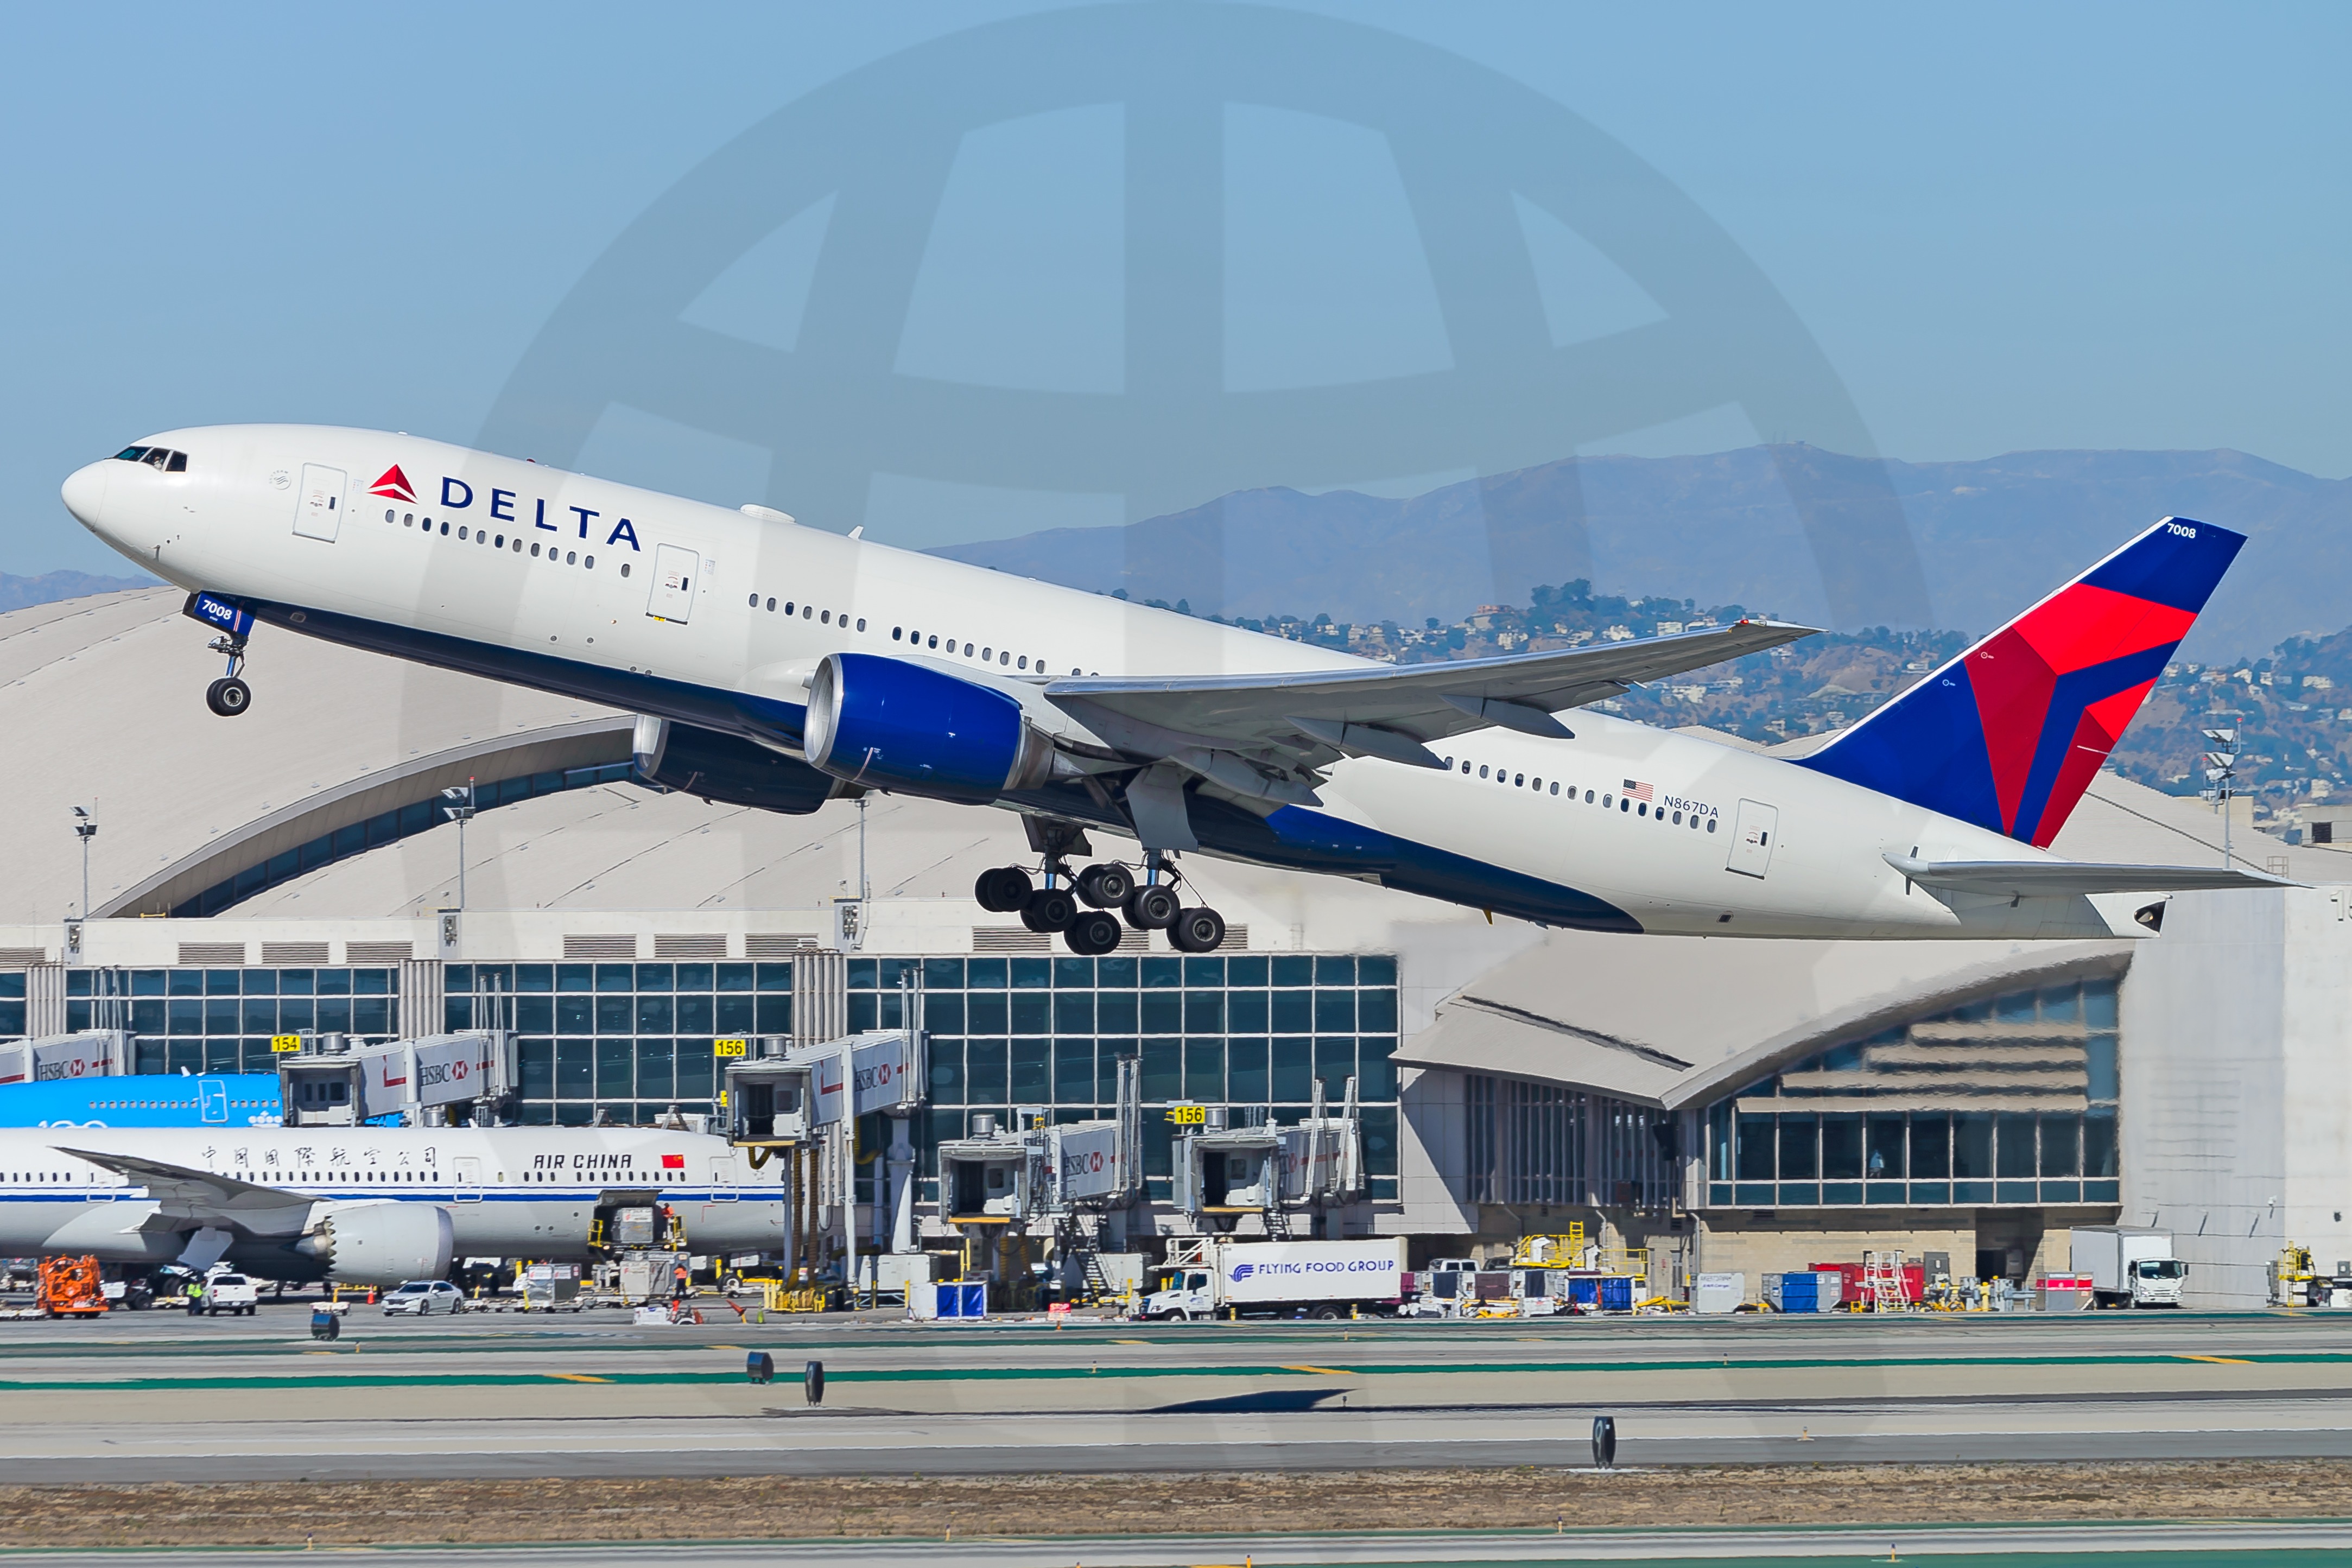 Photo of N867da - Delta Airlines Boeing 777-200ER